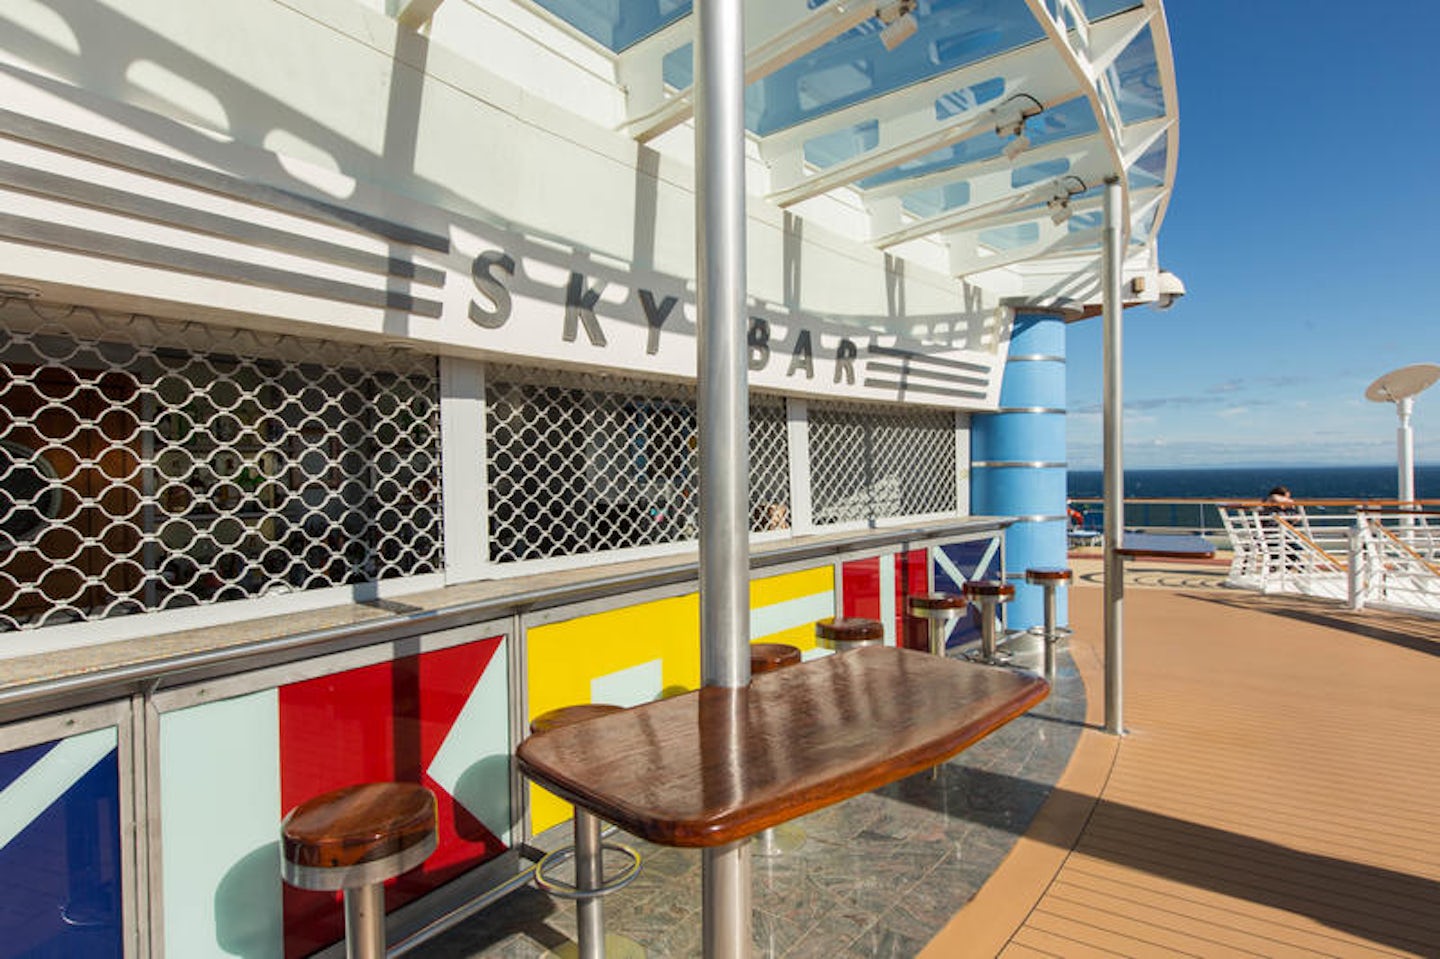 Sky Bar on Radiance of the Seas